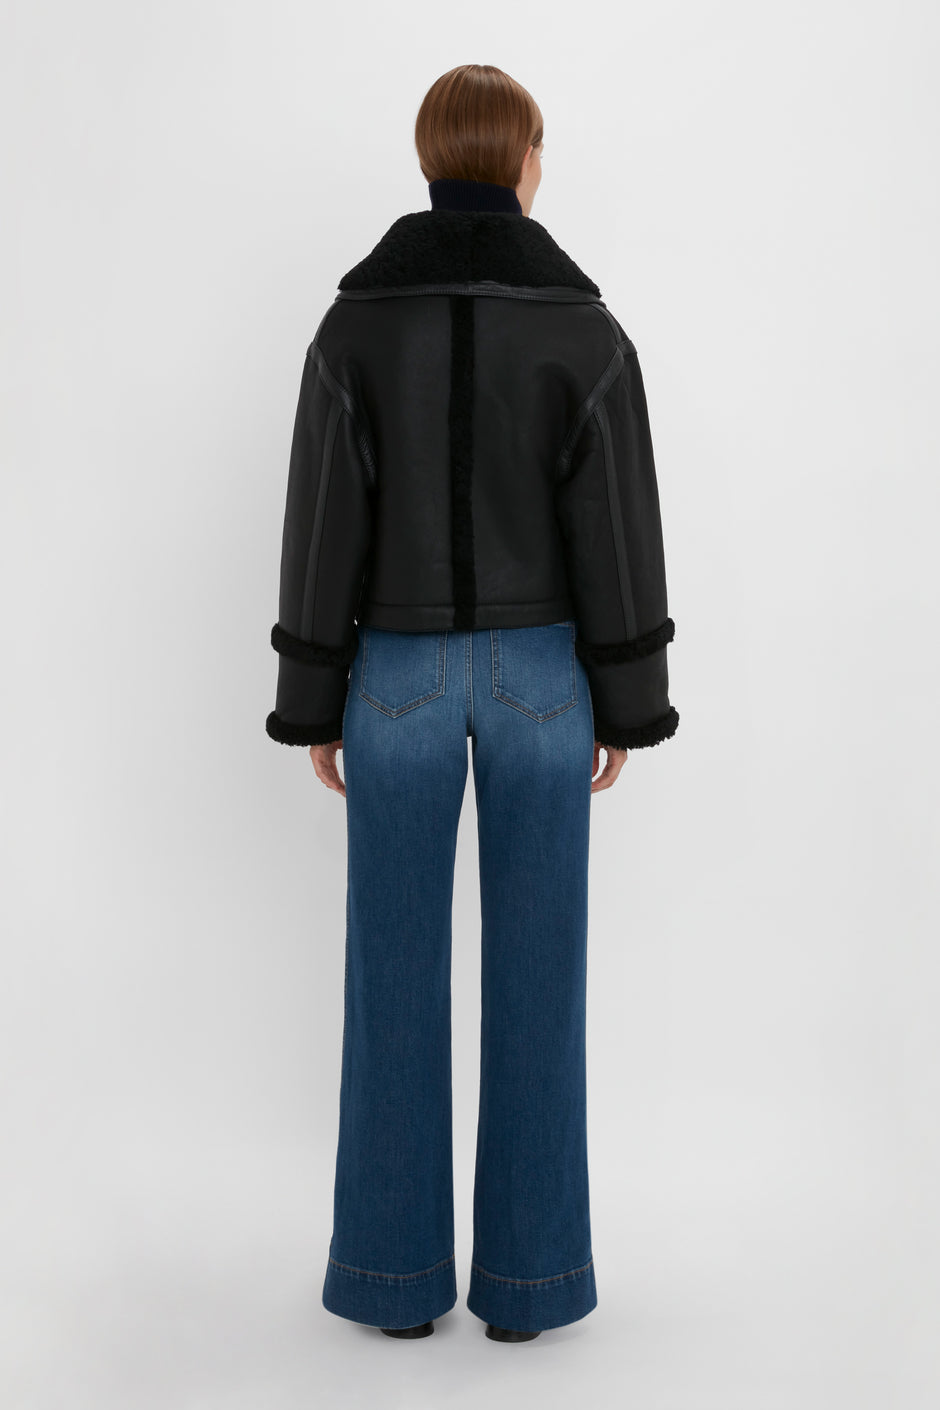 Designer Women's Coats & Jackets Collection – Victoria Beckham